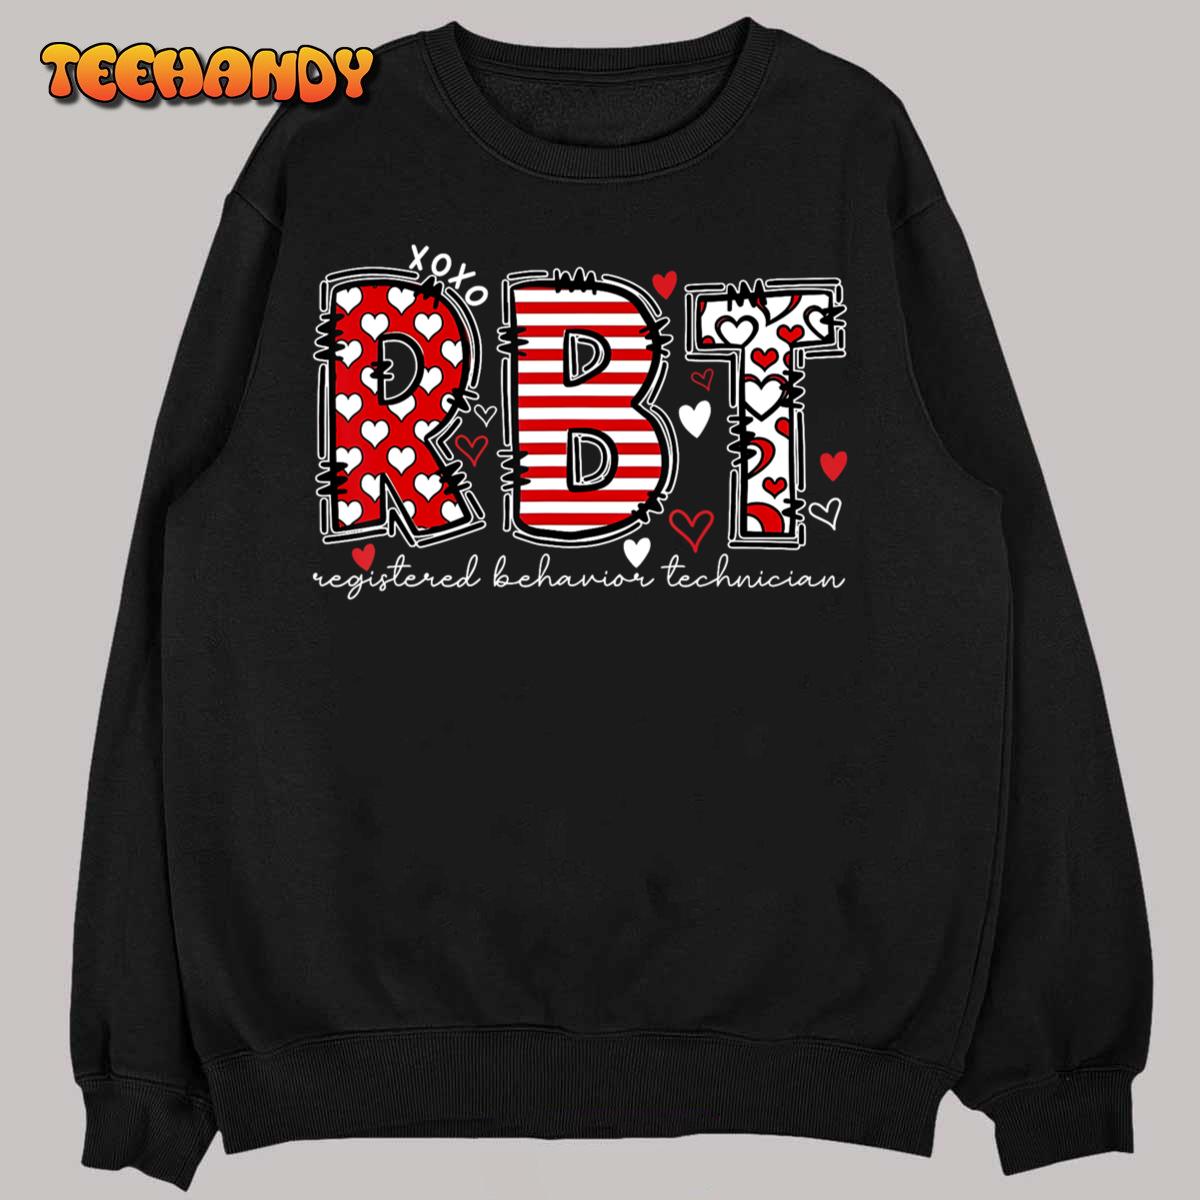 RBT Registered Behavior Technician Valentines ABA Therapist Unisex T-Shirt